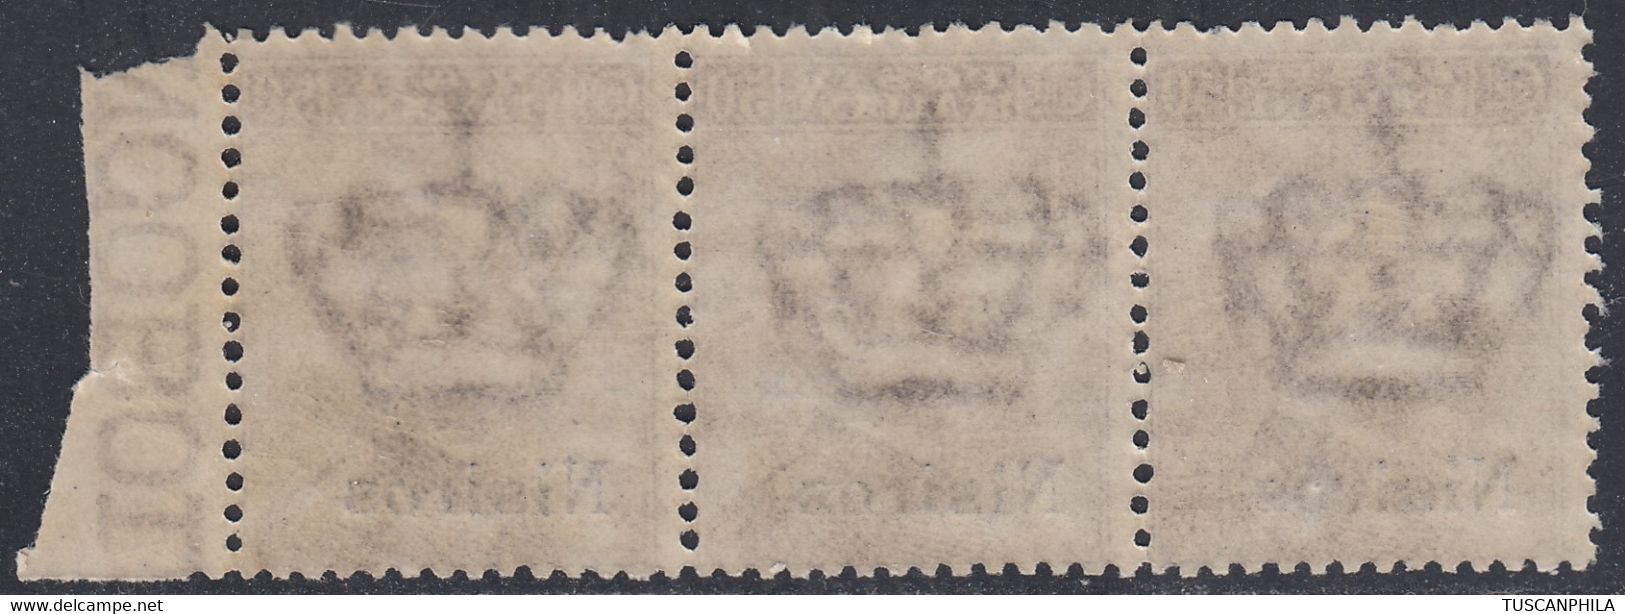 1912 Blocco Di 3 Valoie Sass. 7 MNH** Cv 37.5 - Ägäis (Nisiro)